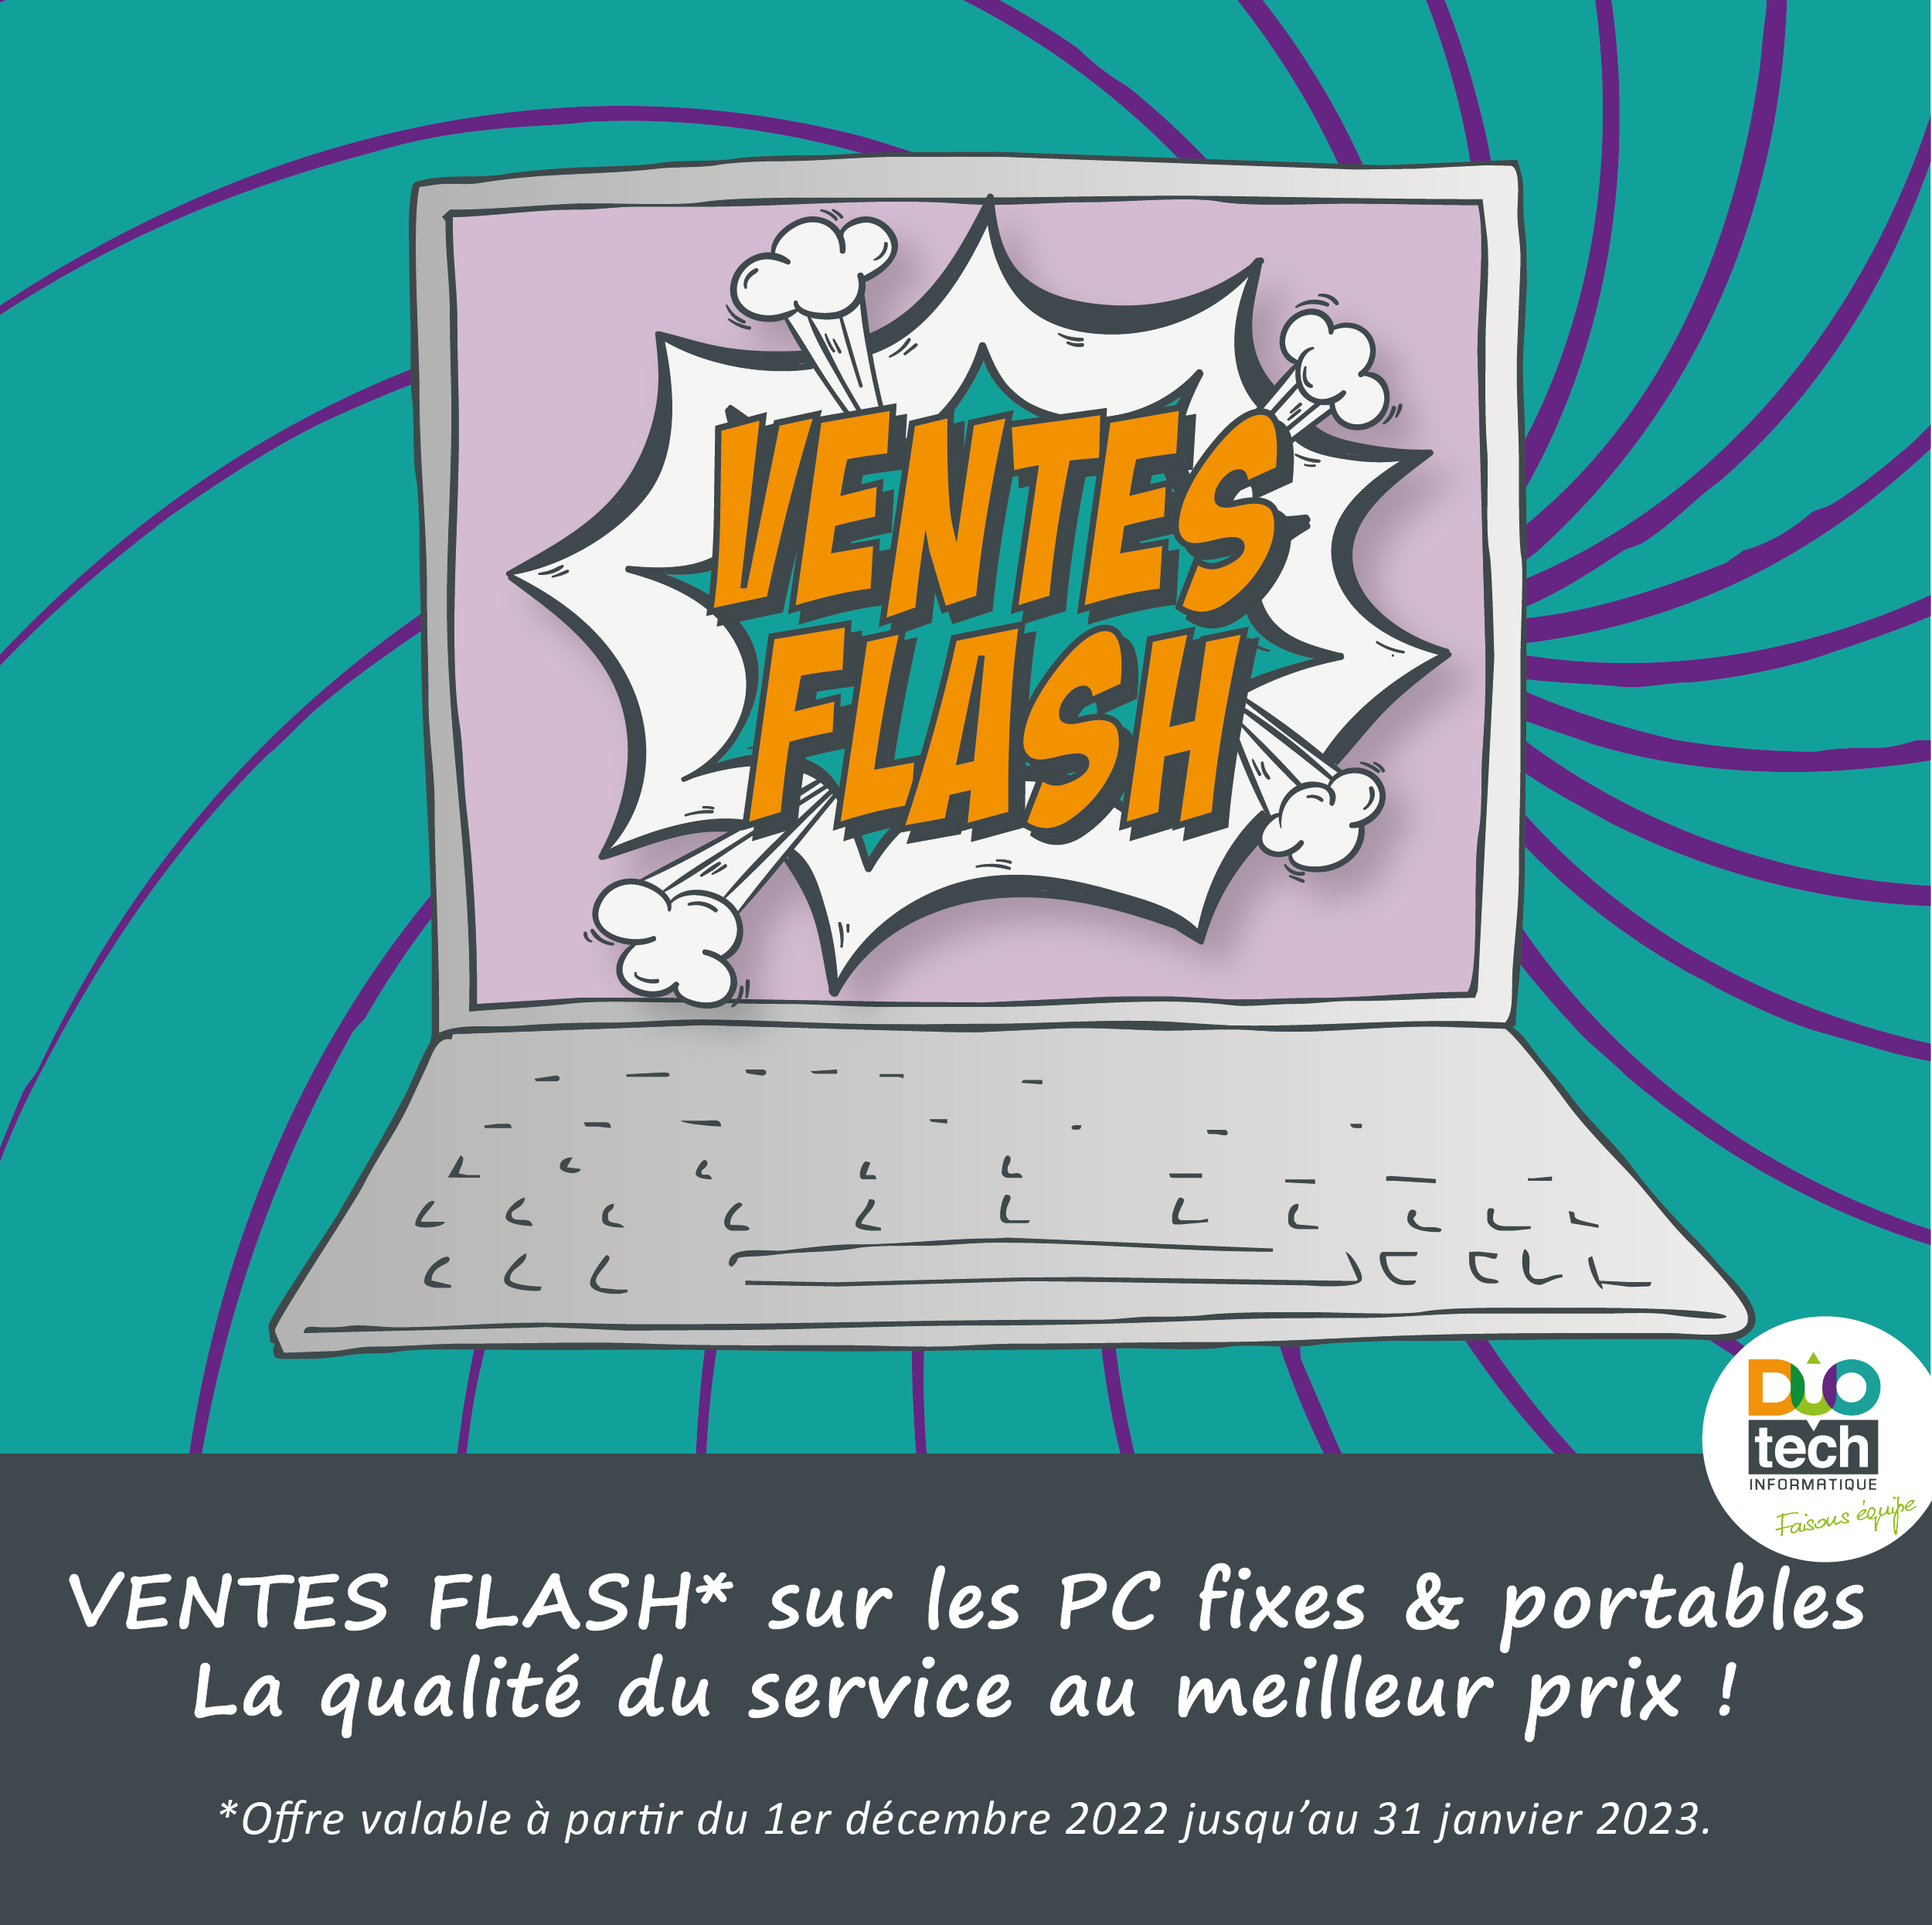 Les Ventes Flash By DUOTECH